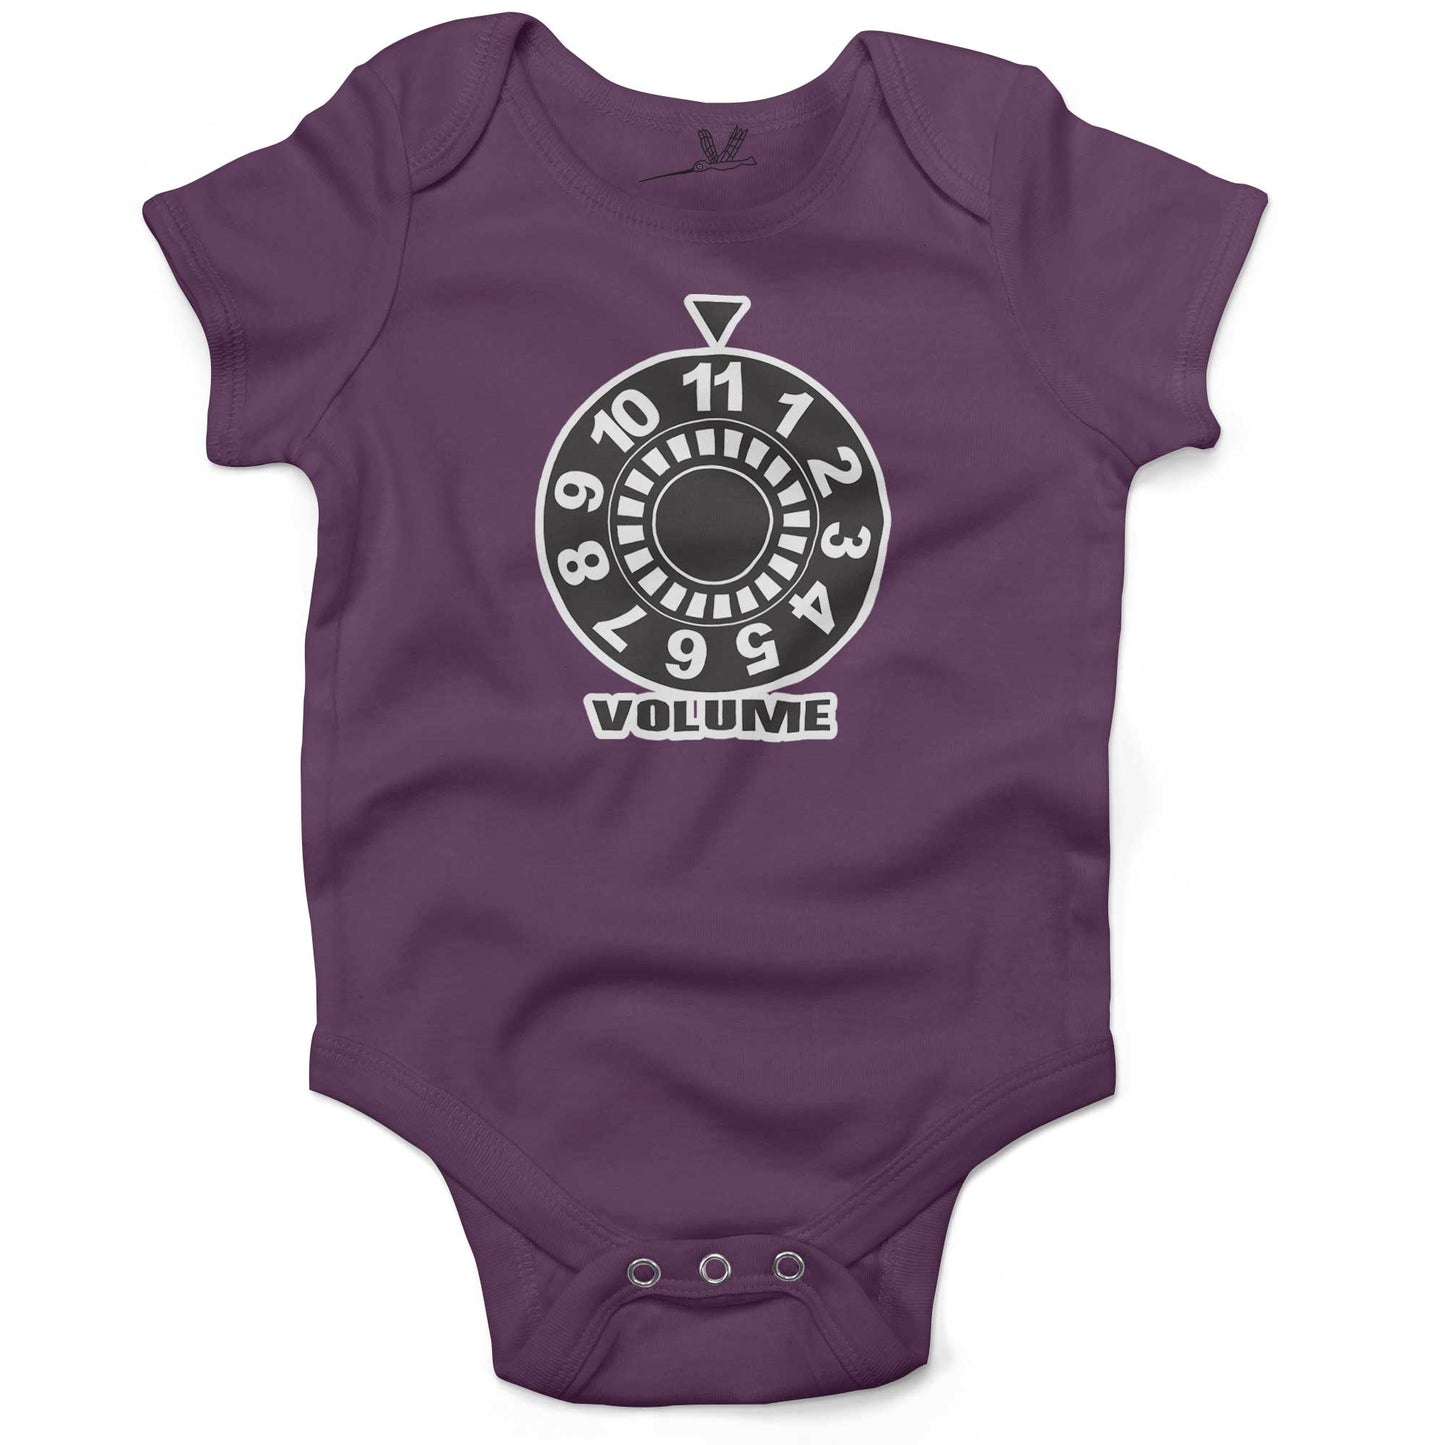 Turn It Up To 11 Infant Bodysuit or Raglan Baby Tee-Organic Purple-3-6 months